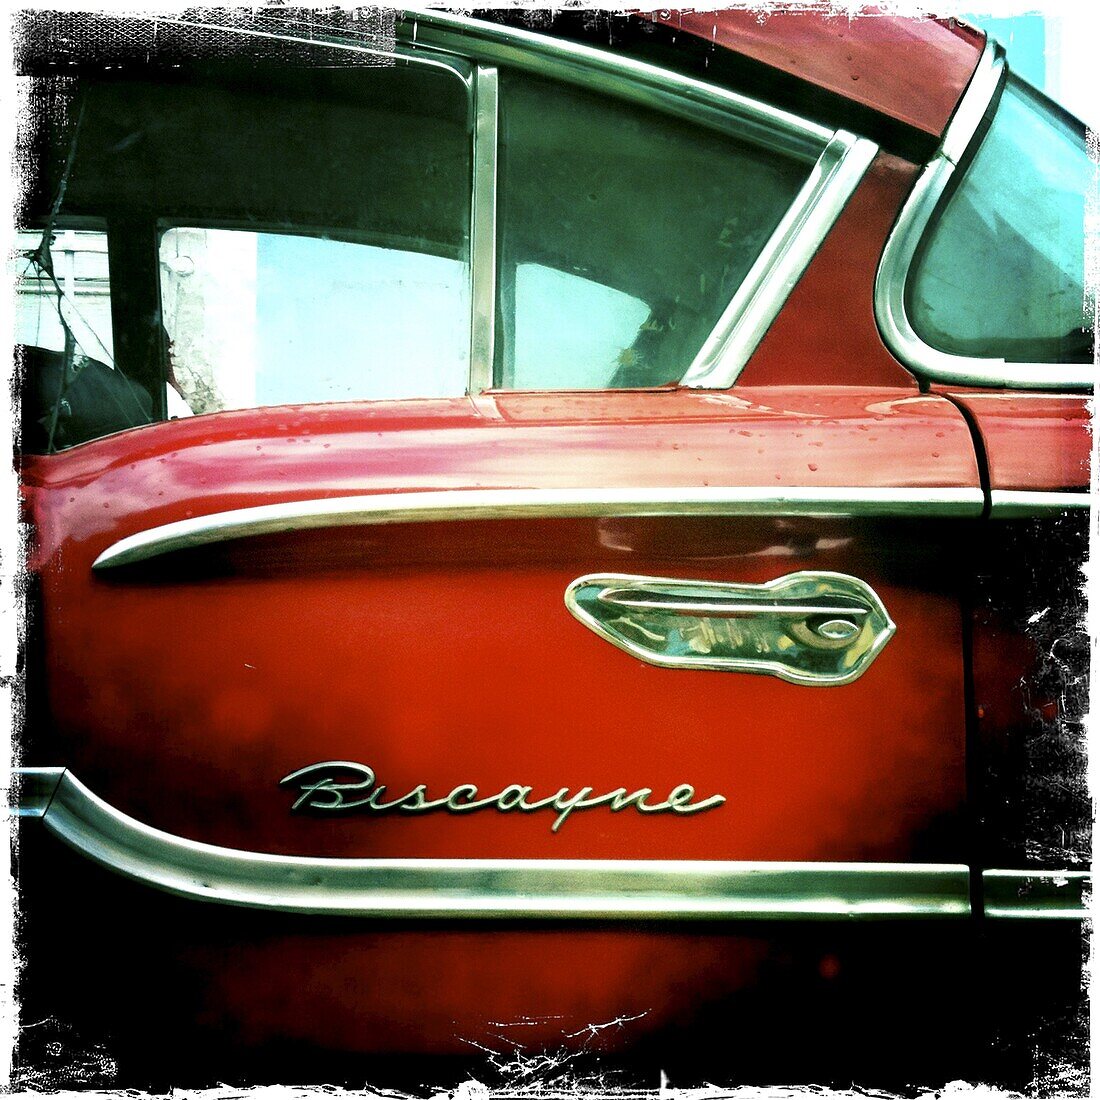 Detail of classic American car, Trinidad, Cuba, West Indies, Caribbean, Central America